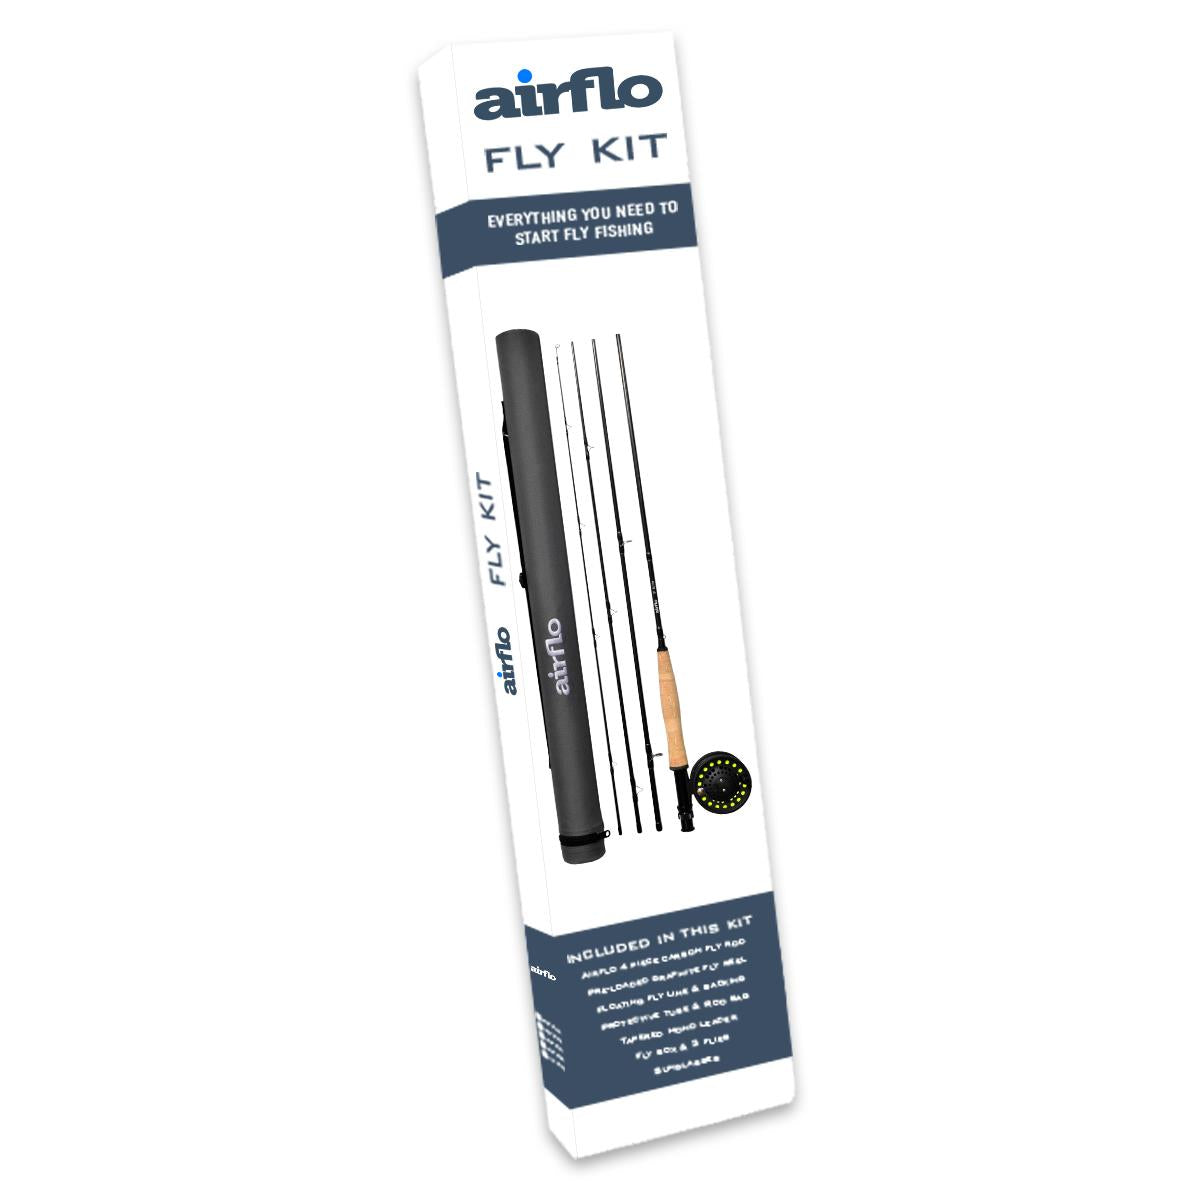 Airflo Fly Kit